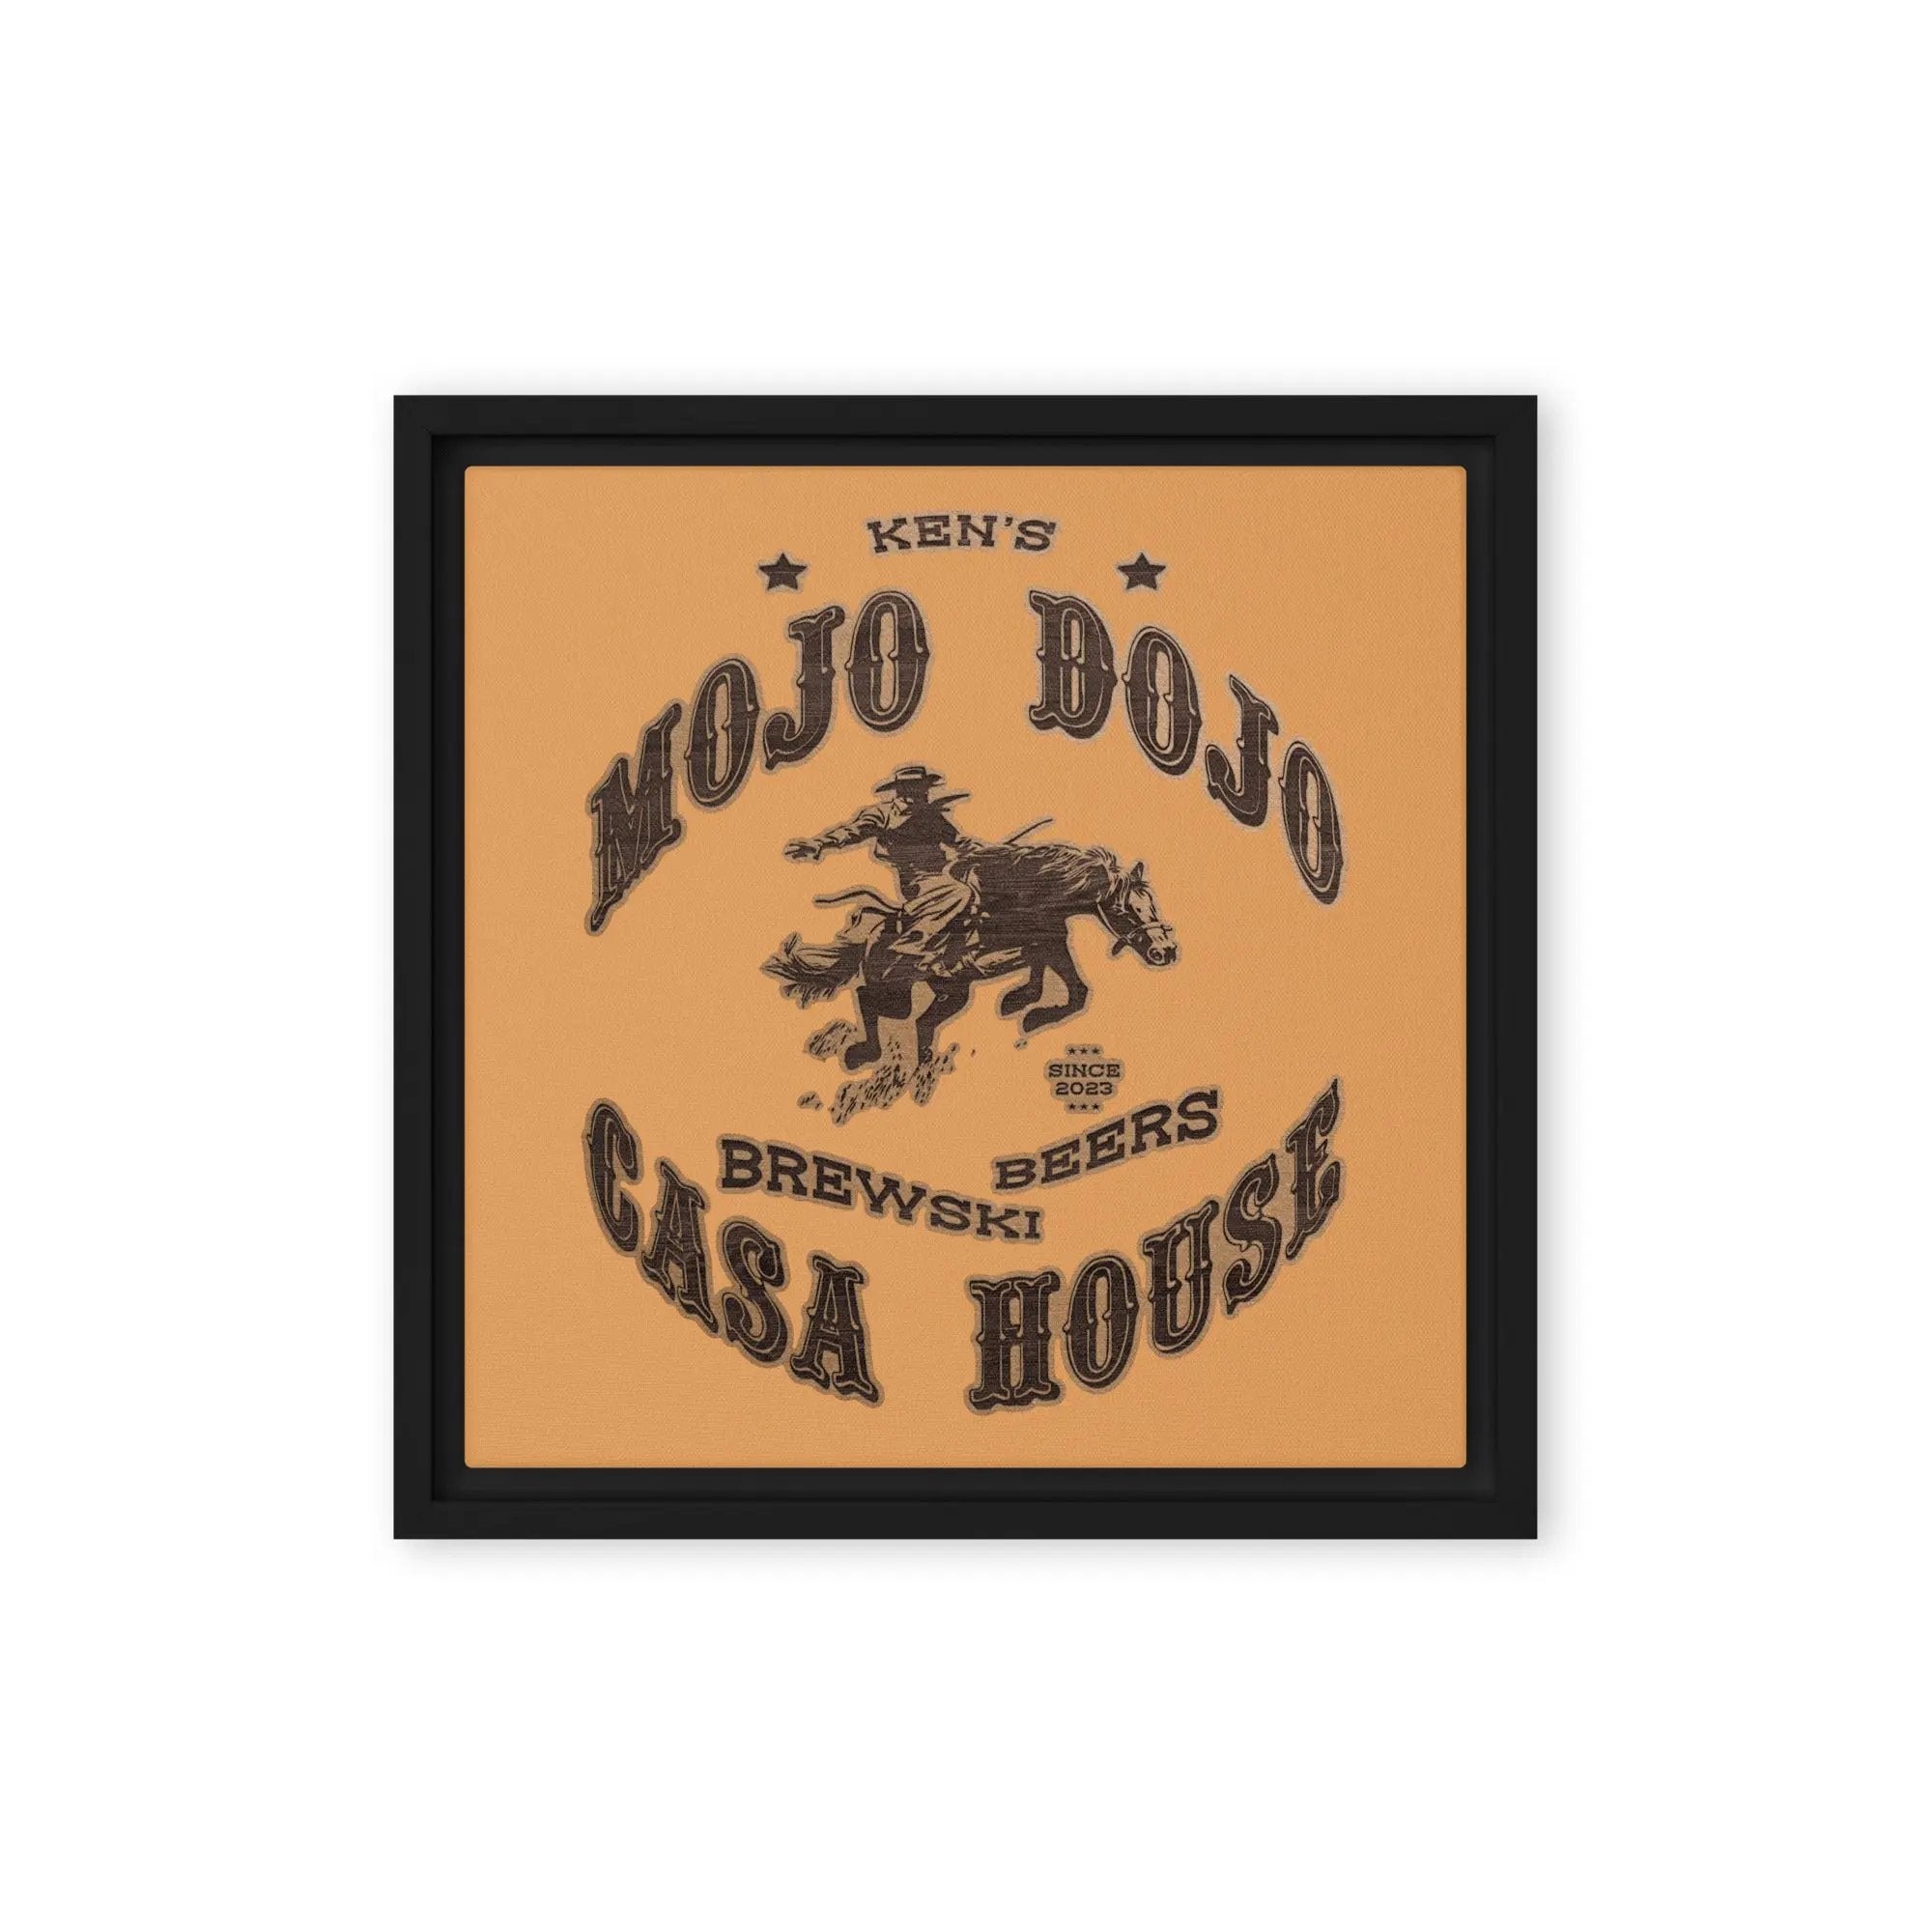 Mojo Dojo Casa House Framed canvas